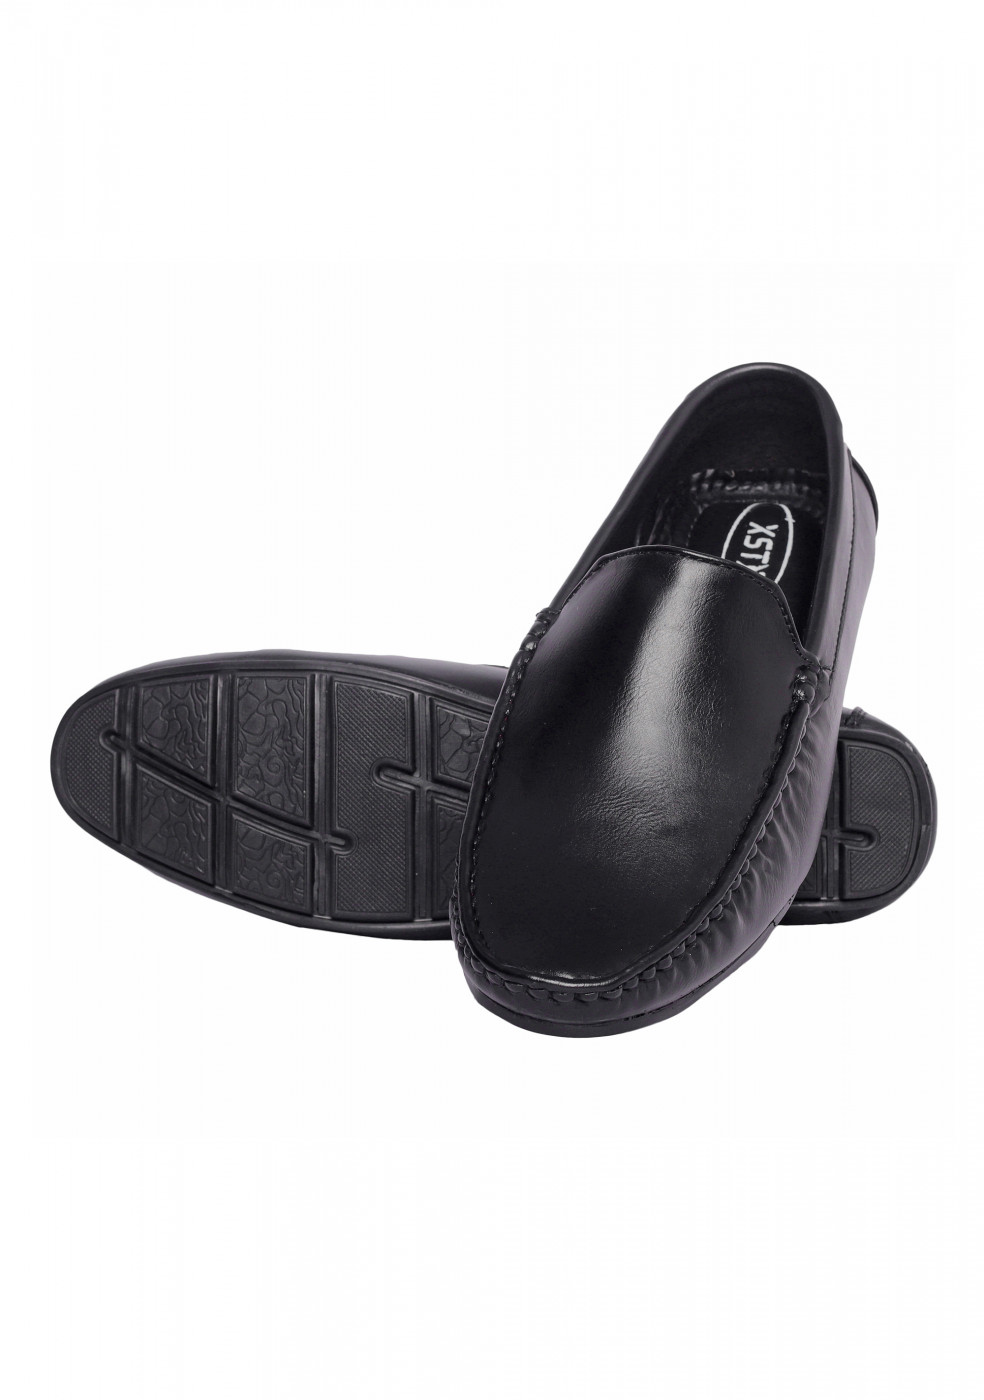 XSTOM Black Comfortable Loafers For Men